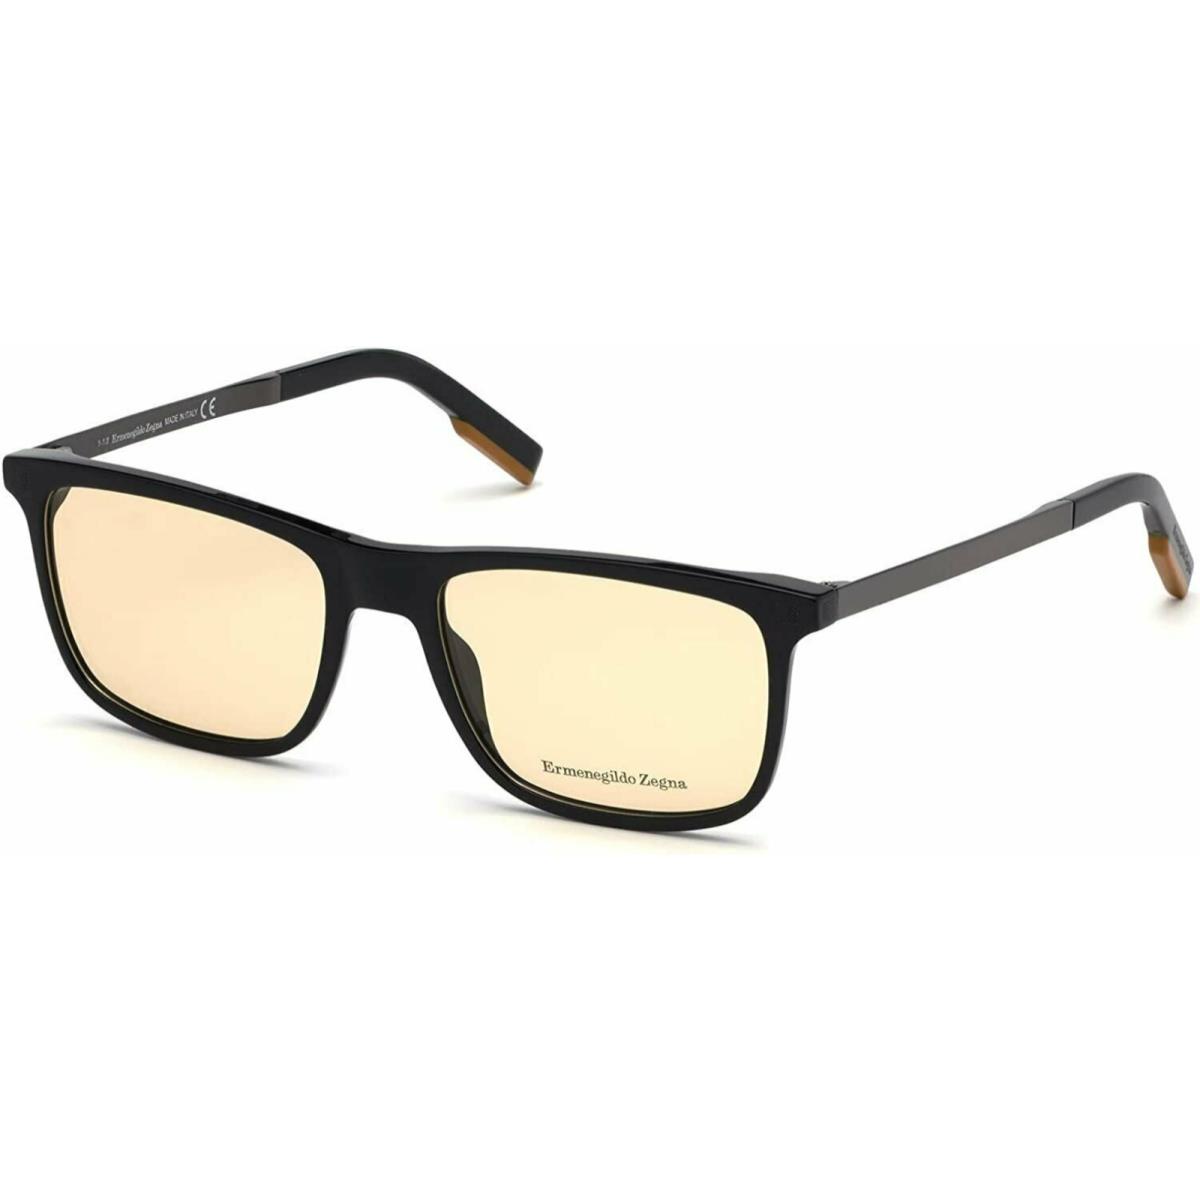 Ermenegildo Zegna Eyeglasses EZ 5142 001 55-18 145 Black Gunmetal Frames